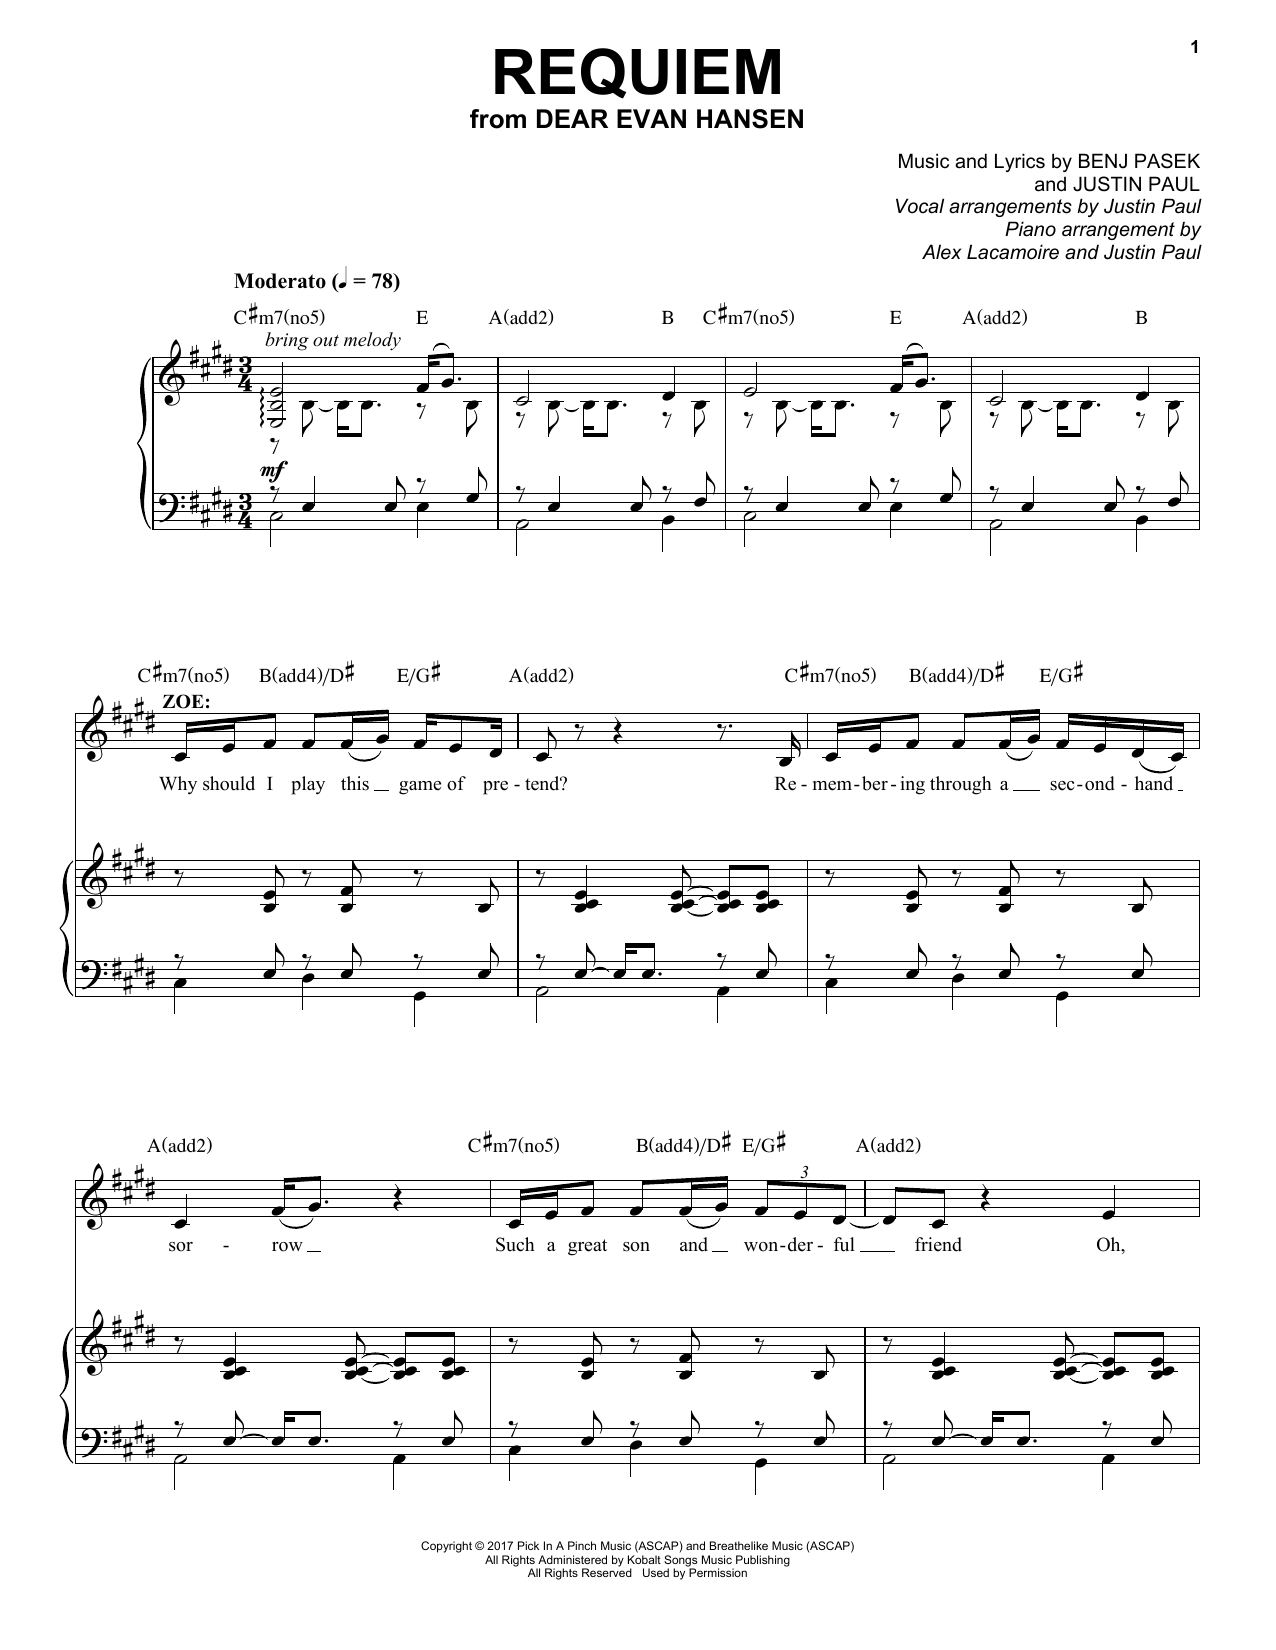 Pasek & Paul Requiem (from Dear Evan Hansen) Sheet Music Notes & Chords for UKEDEH - Download or Print PDF